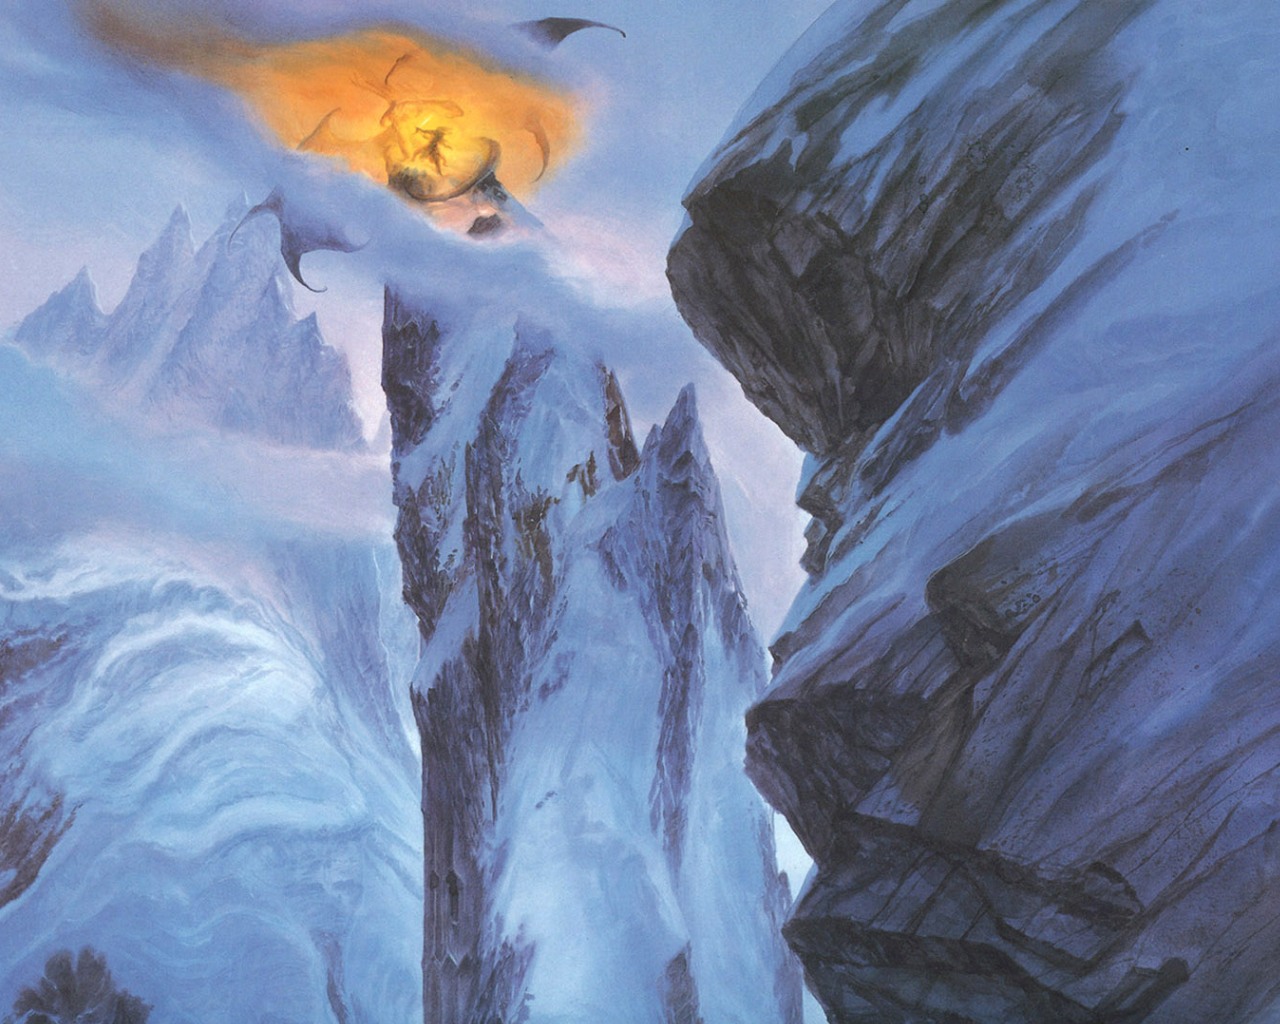 Balrog Gandalf Wallpaper - Balrog Lord Of The Rings Wallpapper - HD Wallpaper 